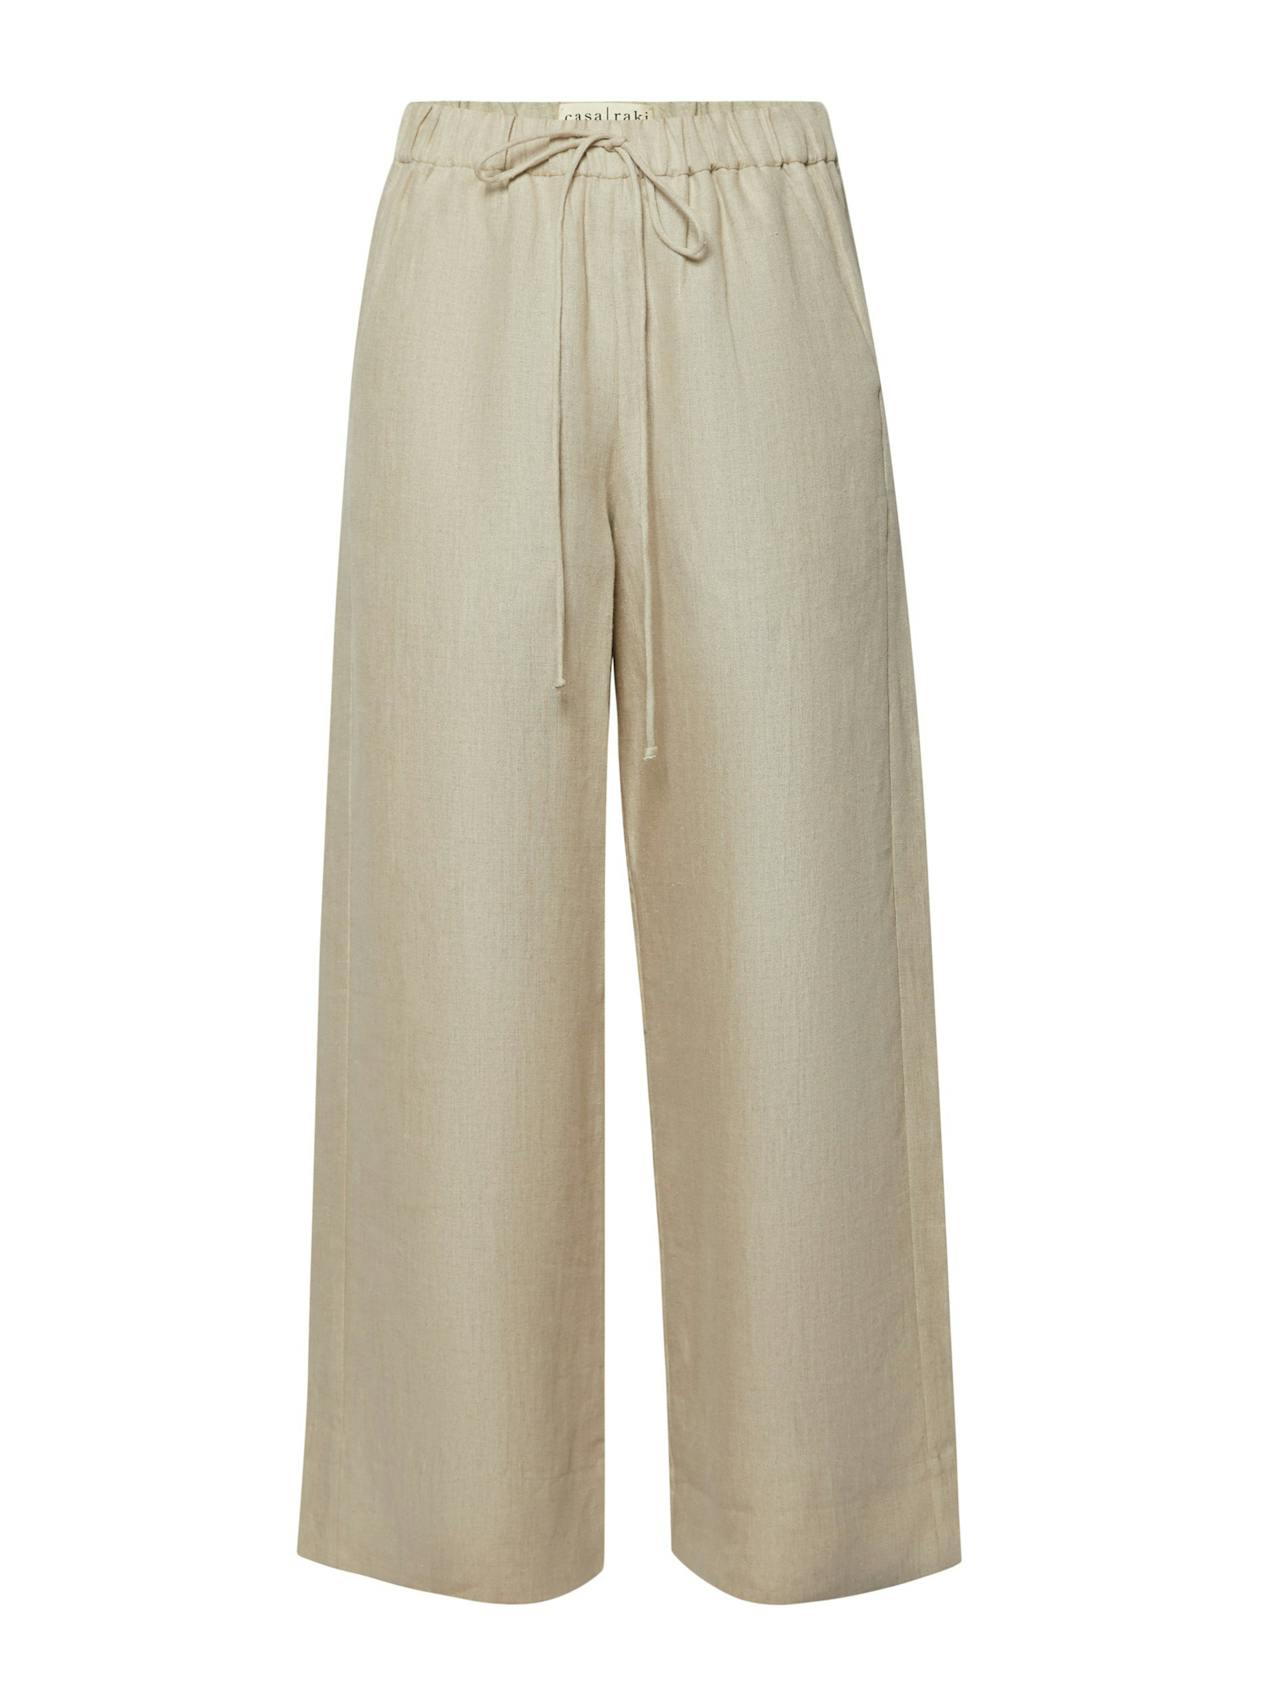 Flax linen Emma trousers